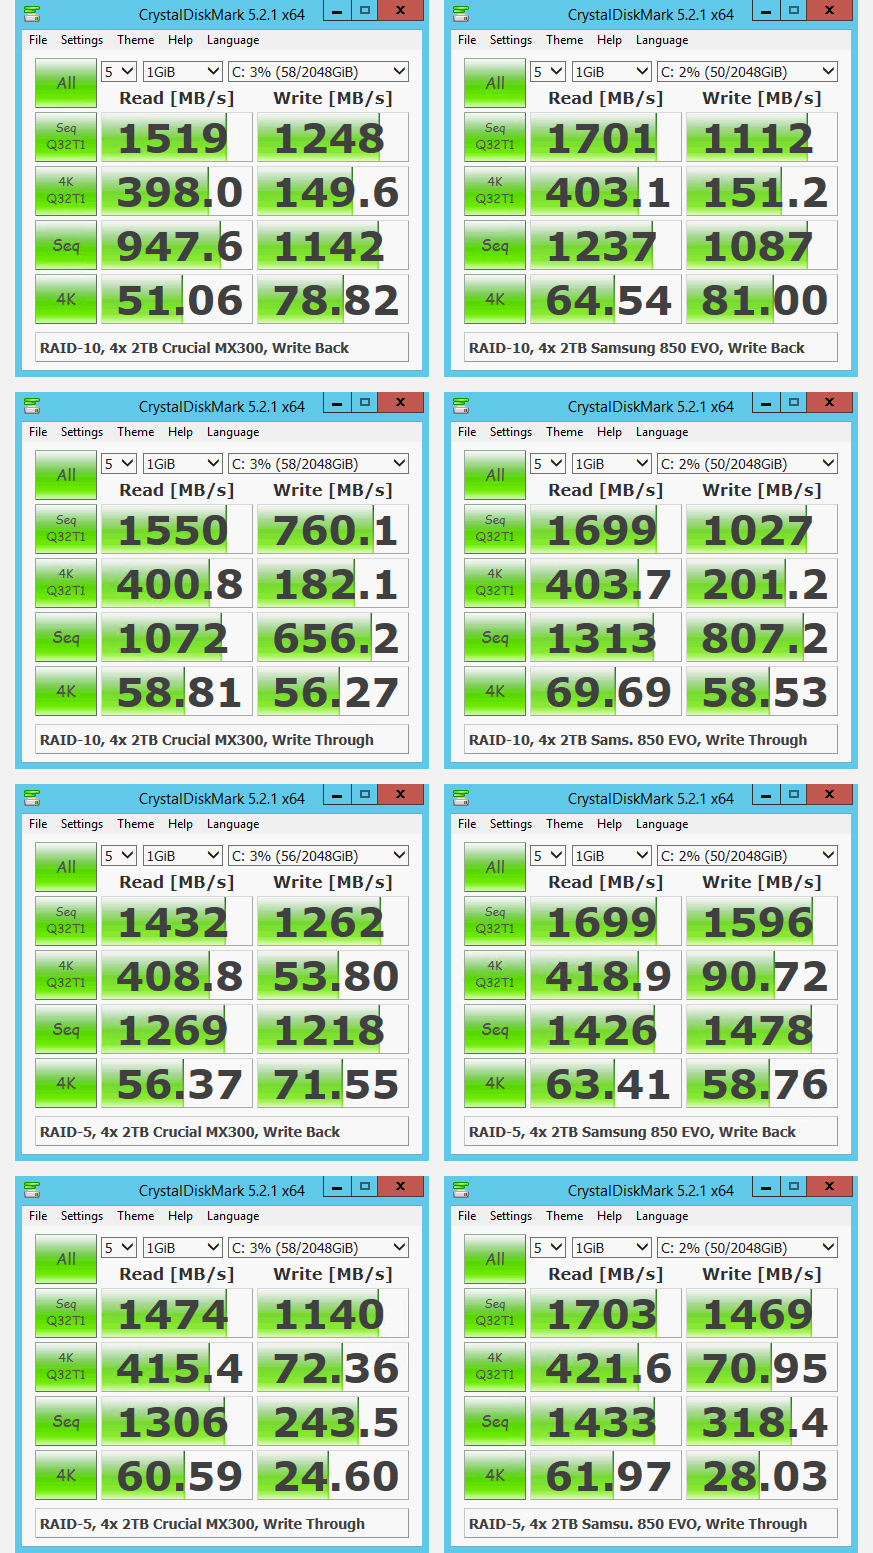 CrystlaDiskMark benchmarks for the HP DL580 G7